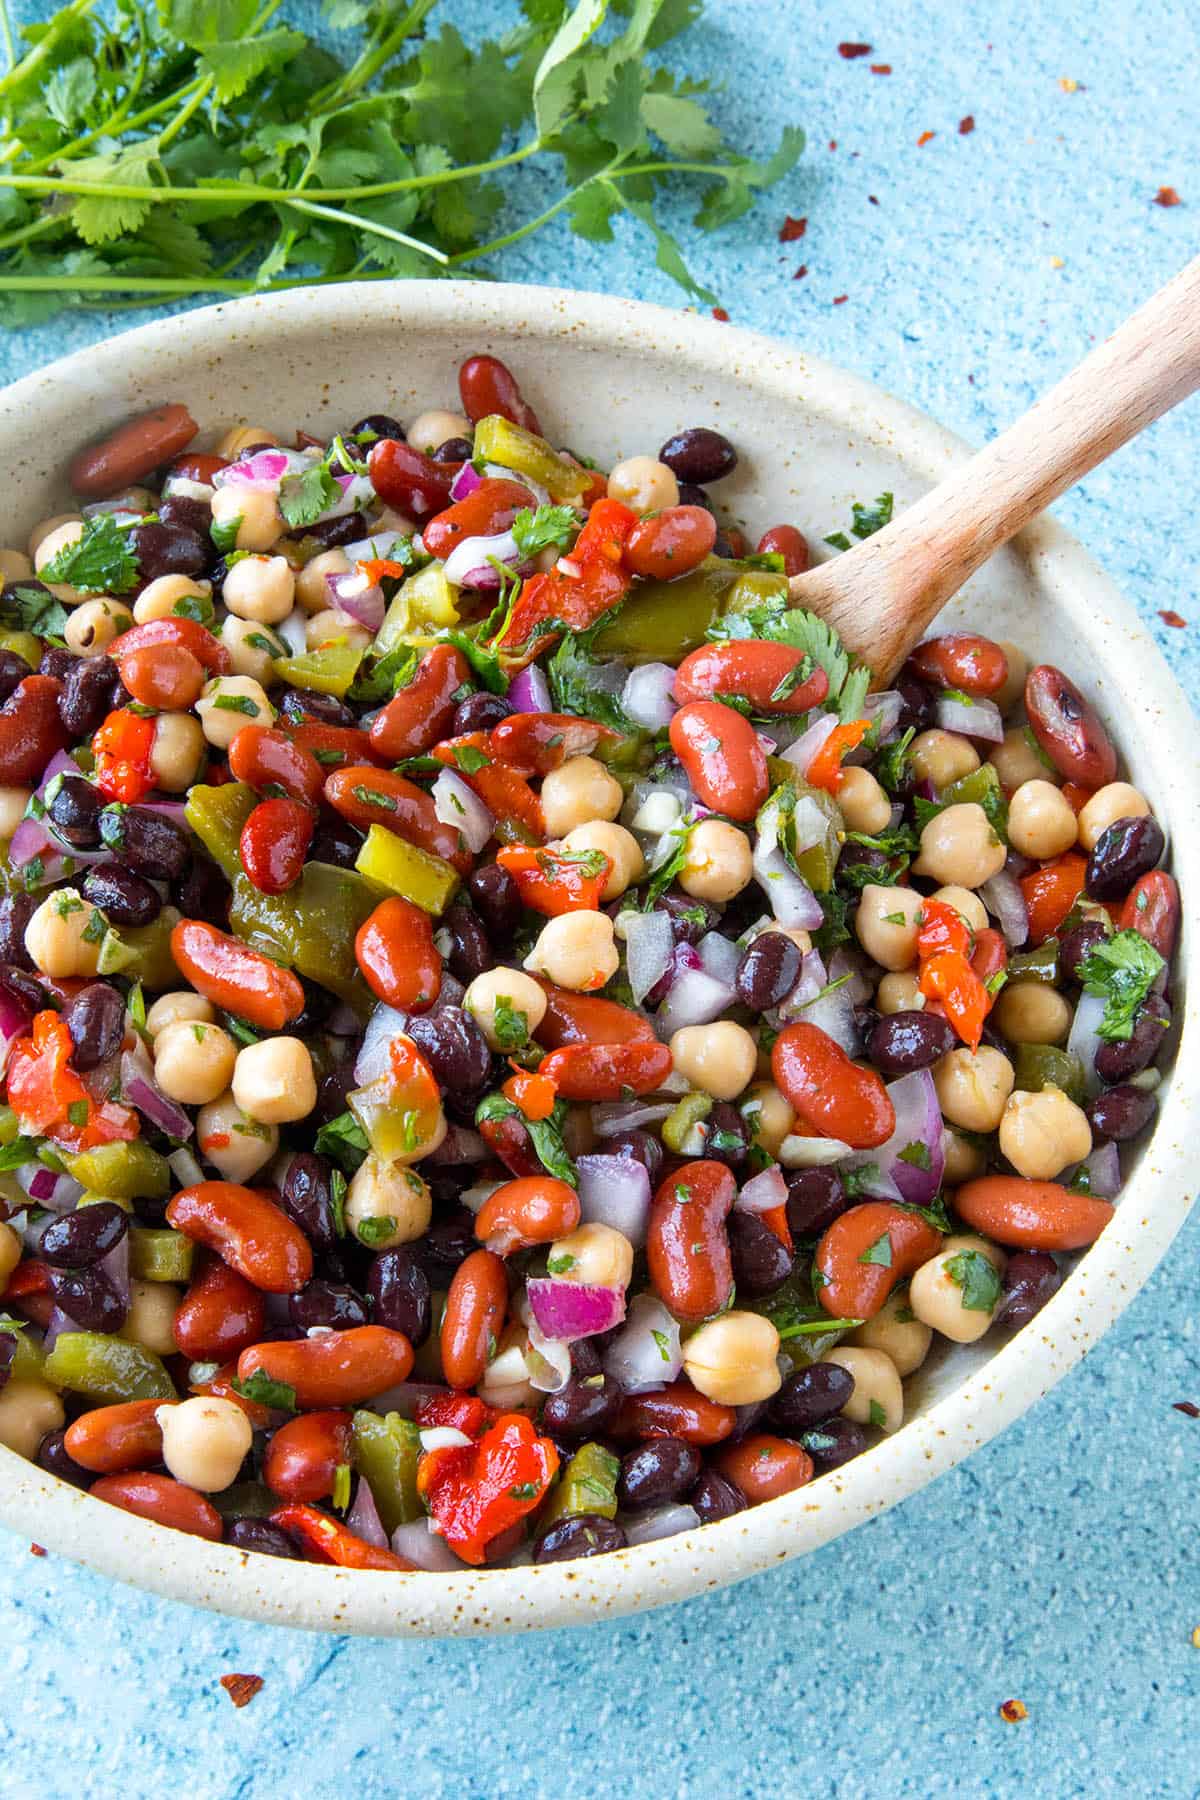 Mike's Zesty Three Bean Salad Recipe